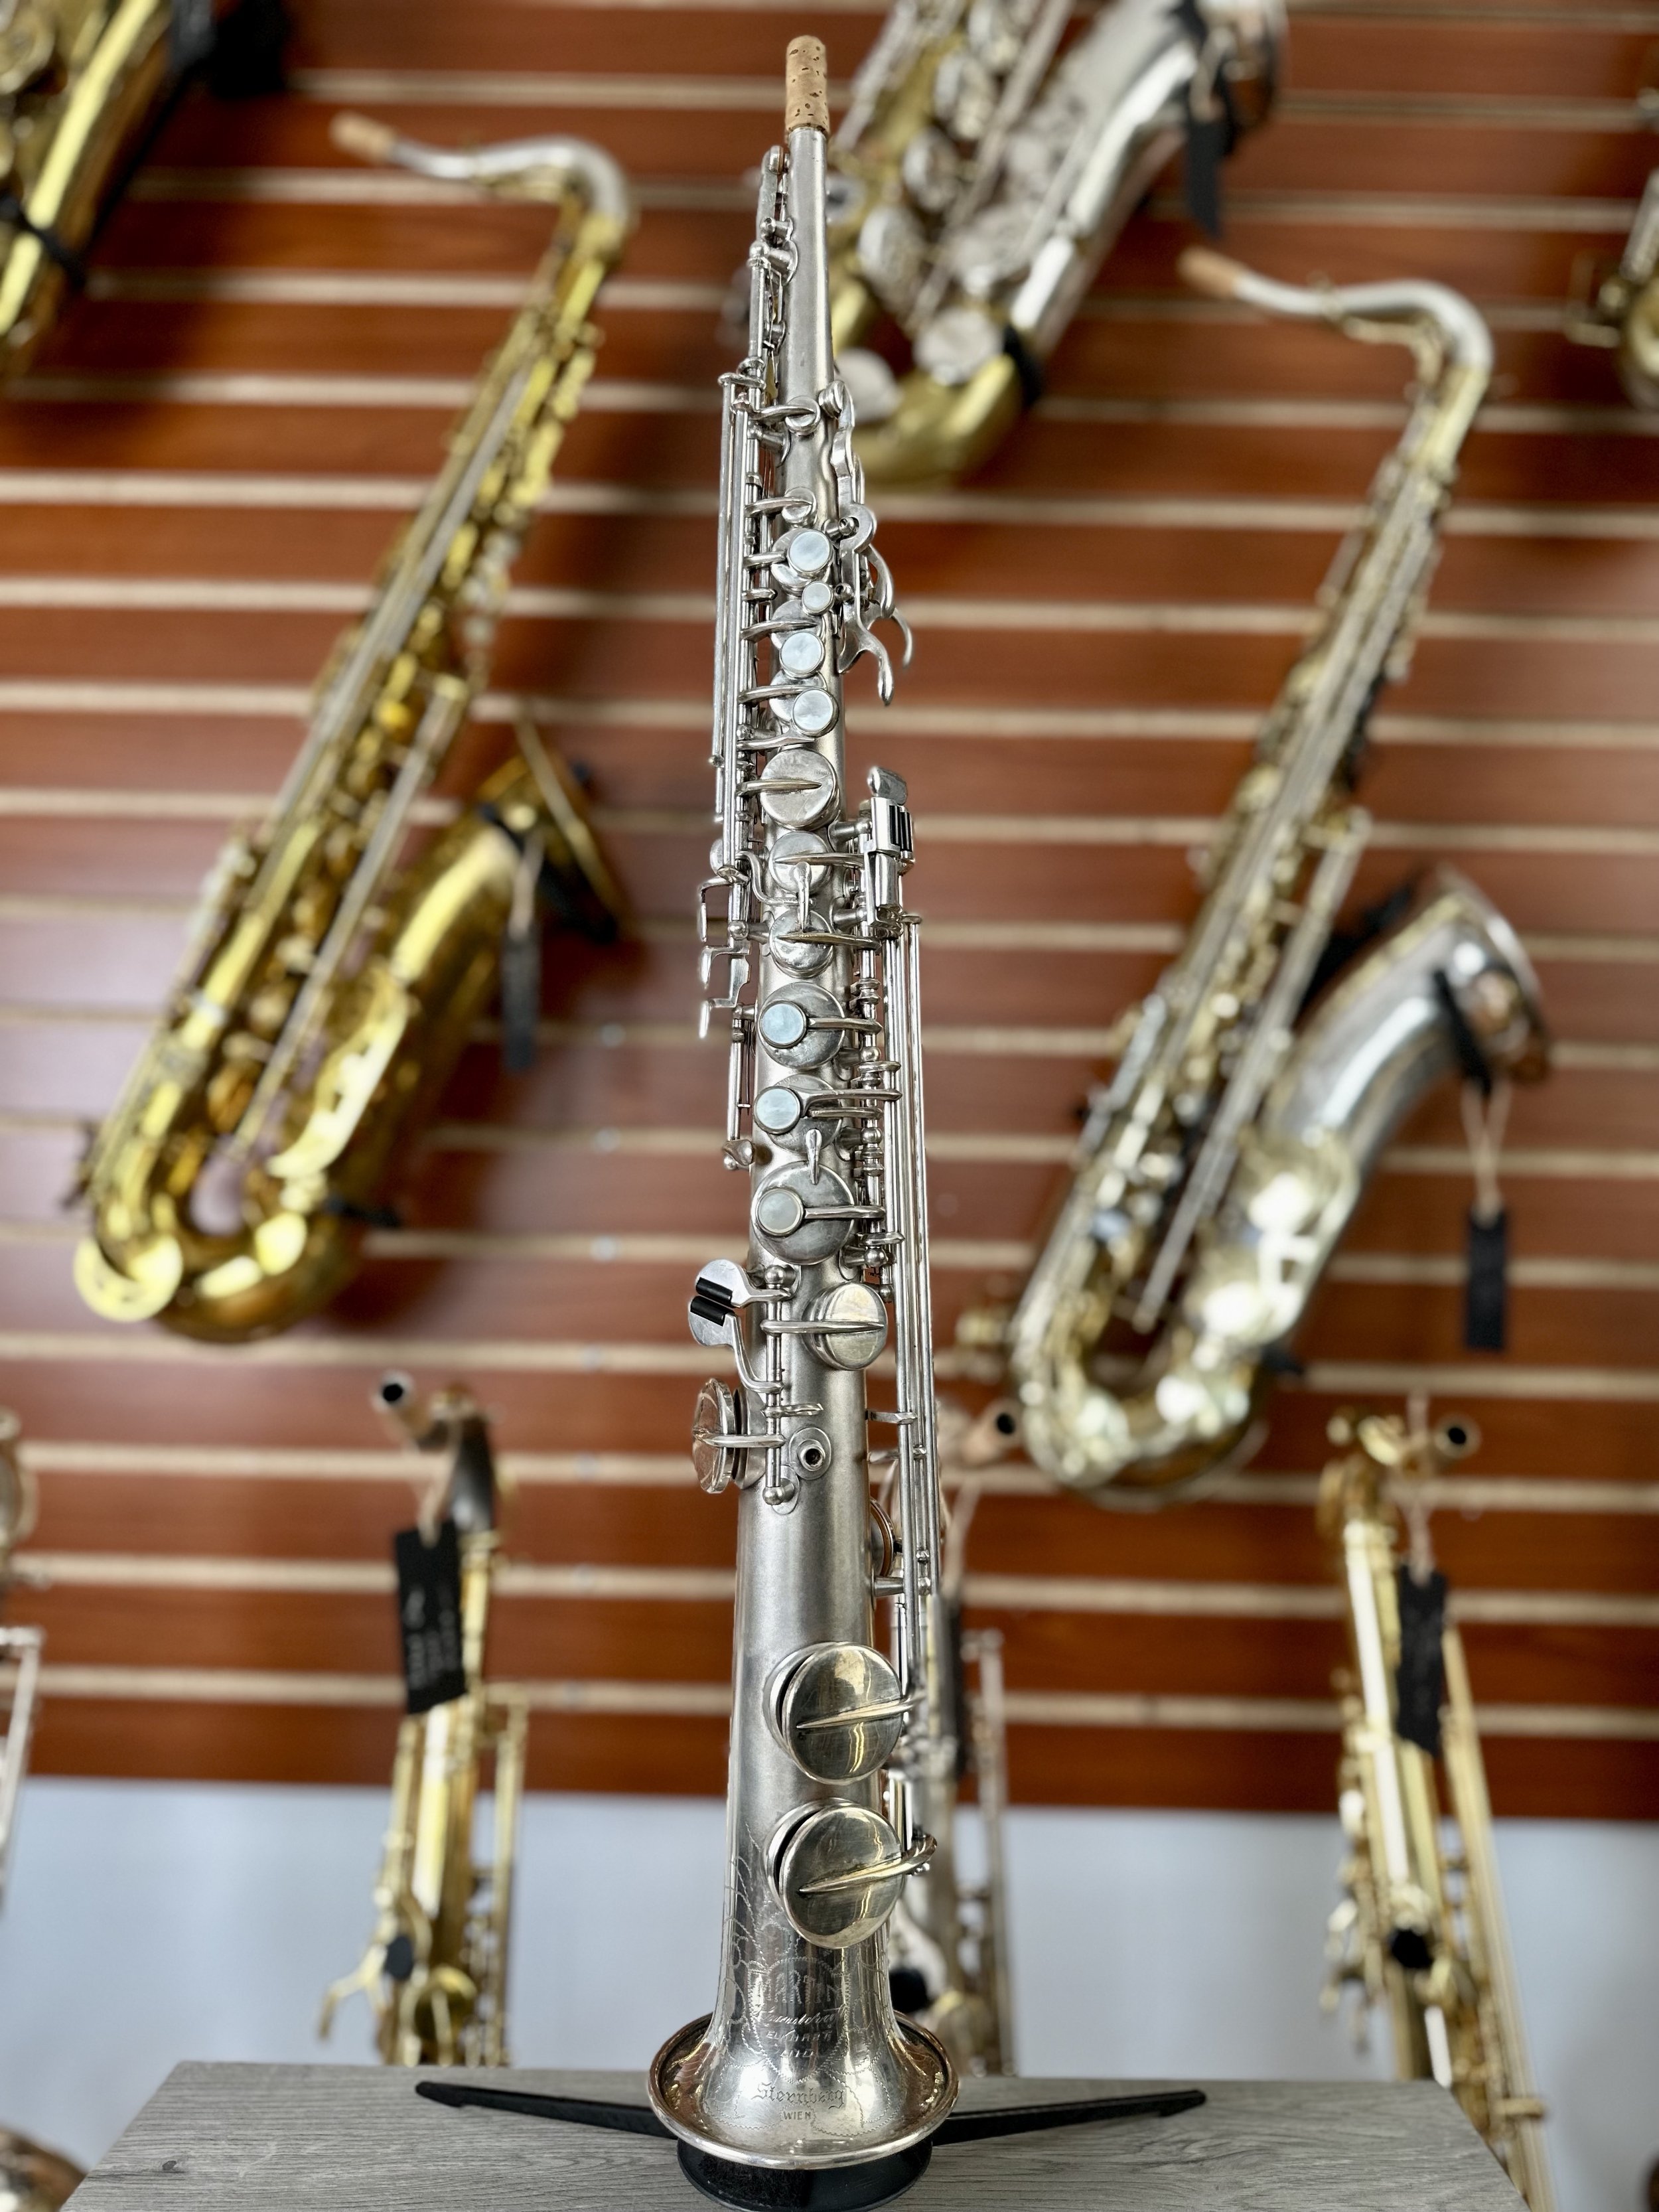 Voyager Saxophone Multi Tool — The Boston Sax Shop